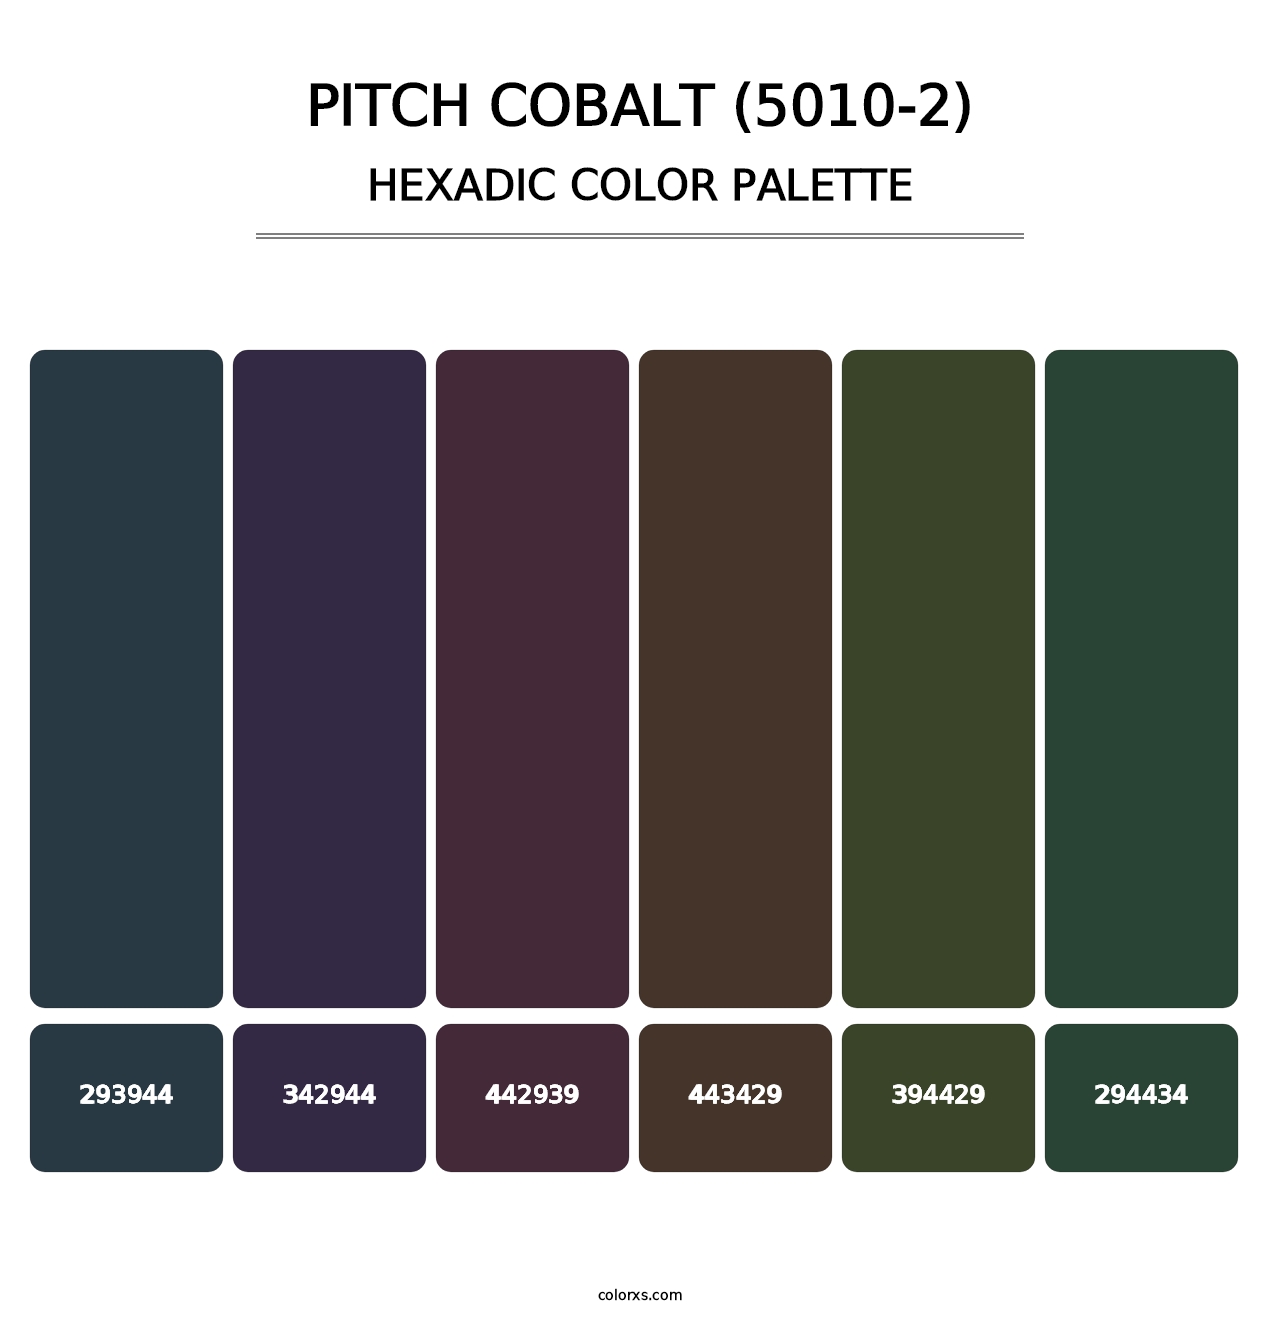 Pitch Cobalt (5010-2) - Hexadic Color Palette